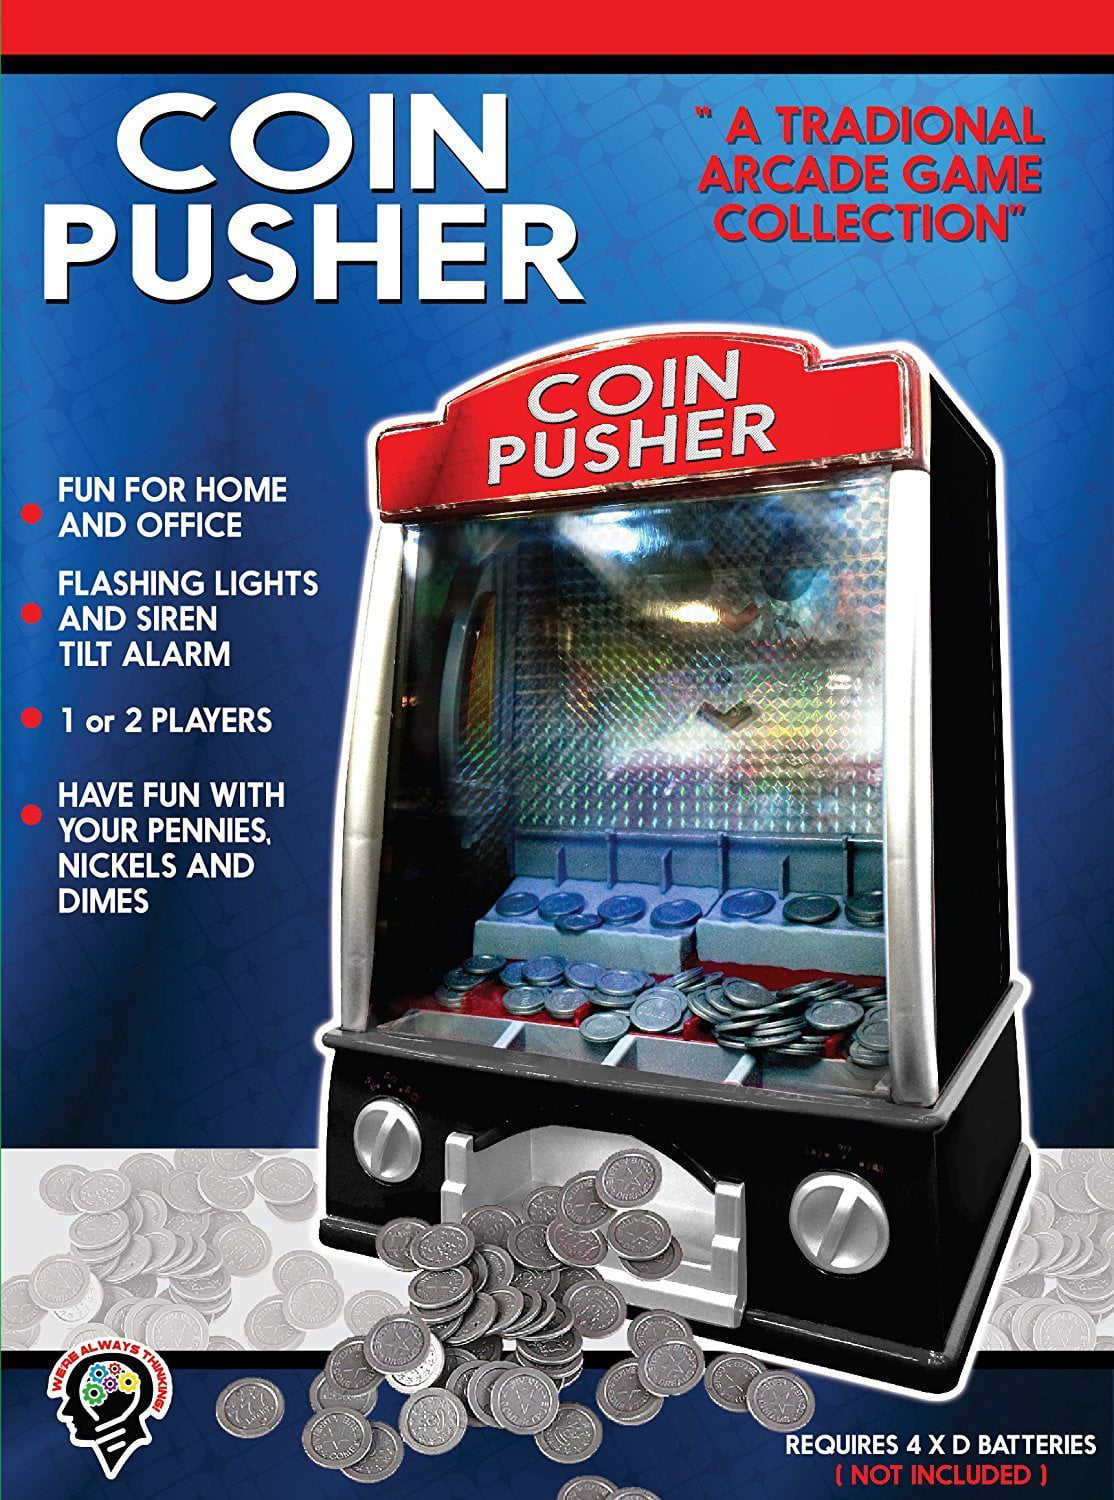 Electronic Arcade Coin Pusher Toy – Sheboygan Discount Warehouse